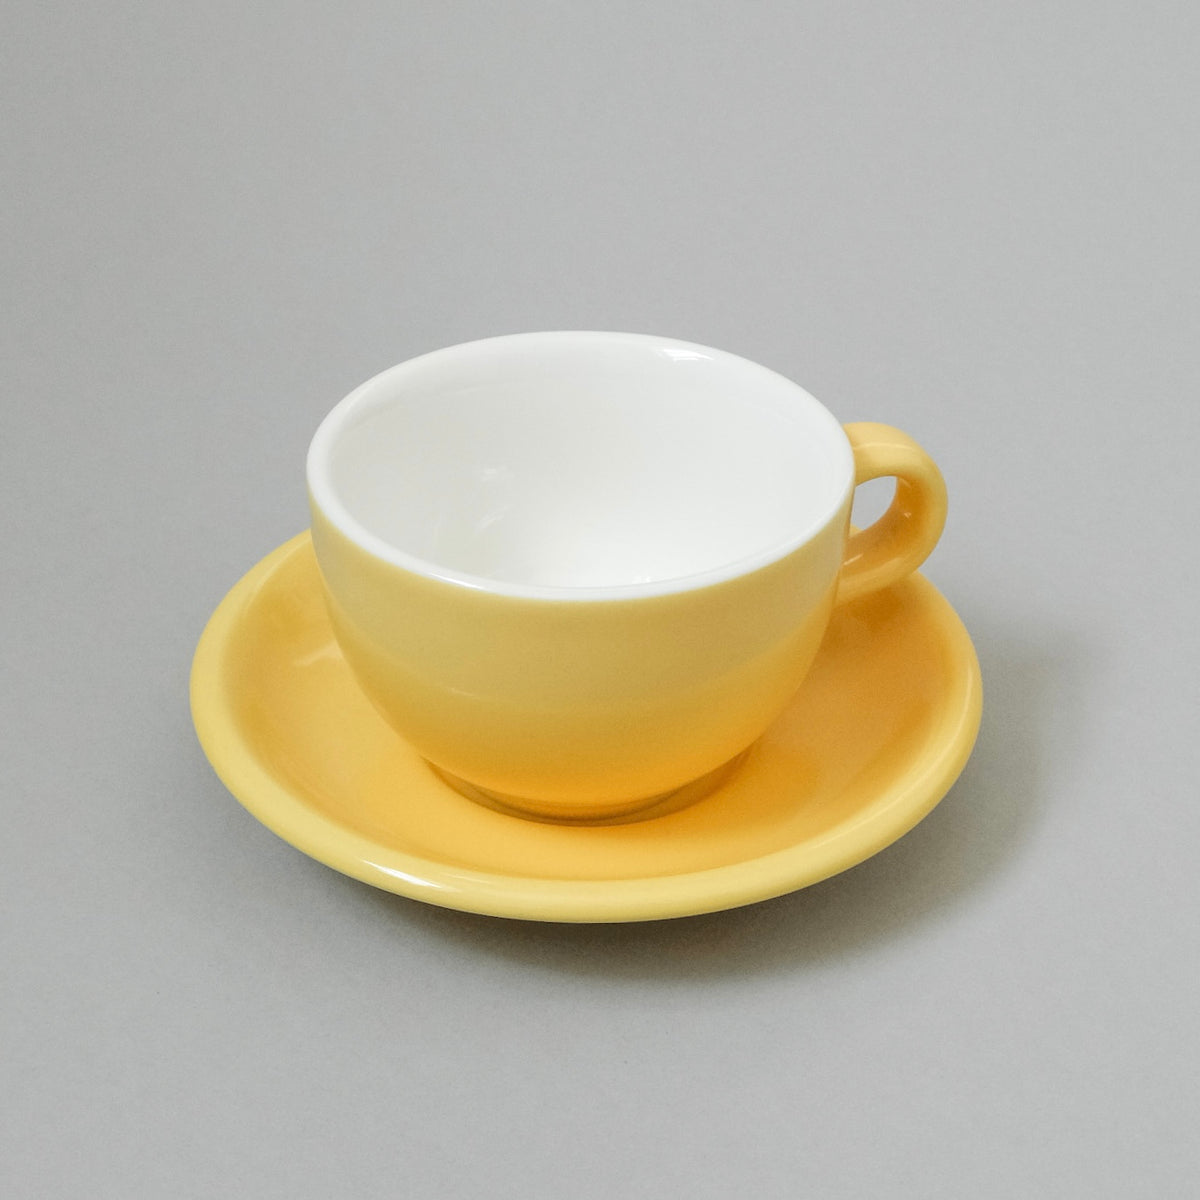 Set 4 Espresso Cup & Saucer Lemon